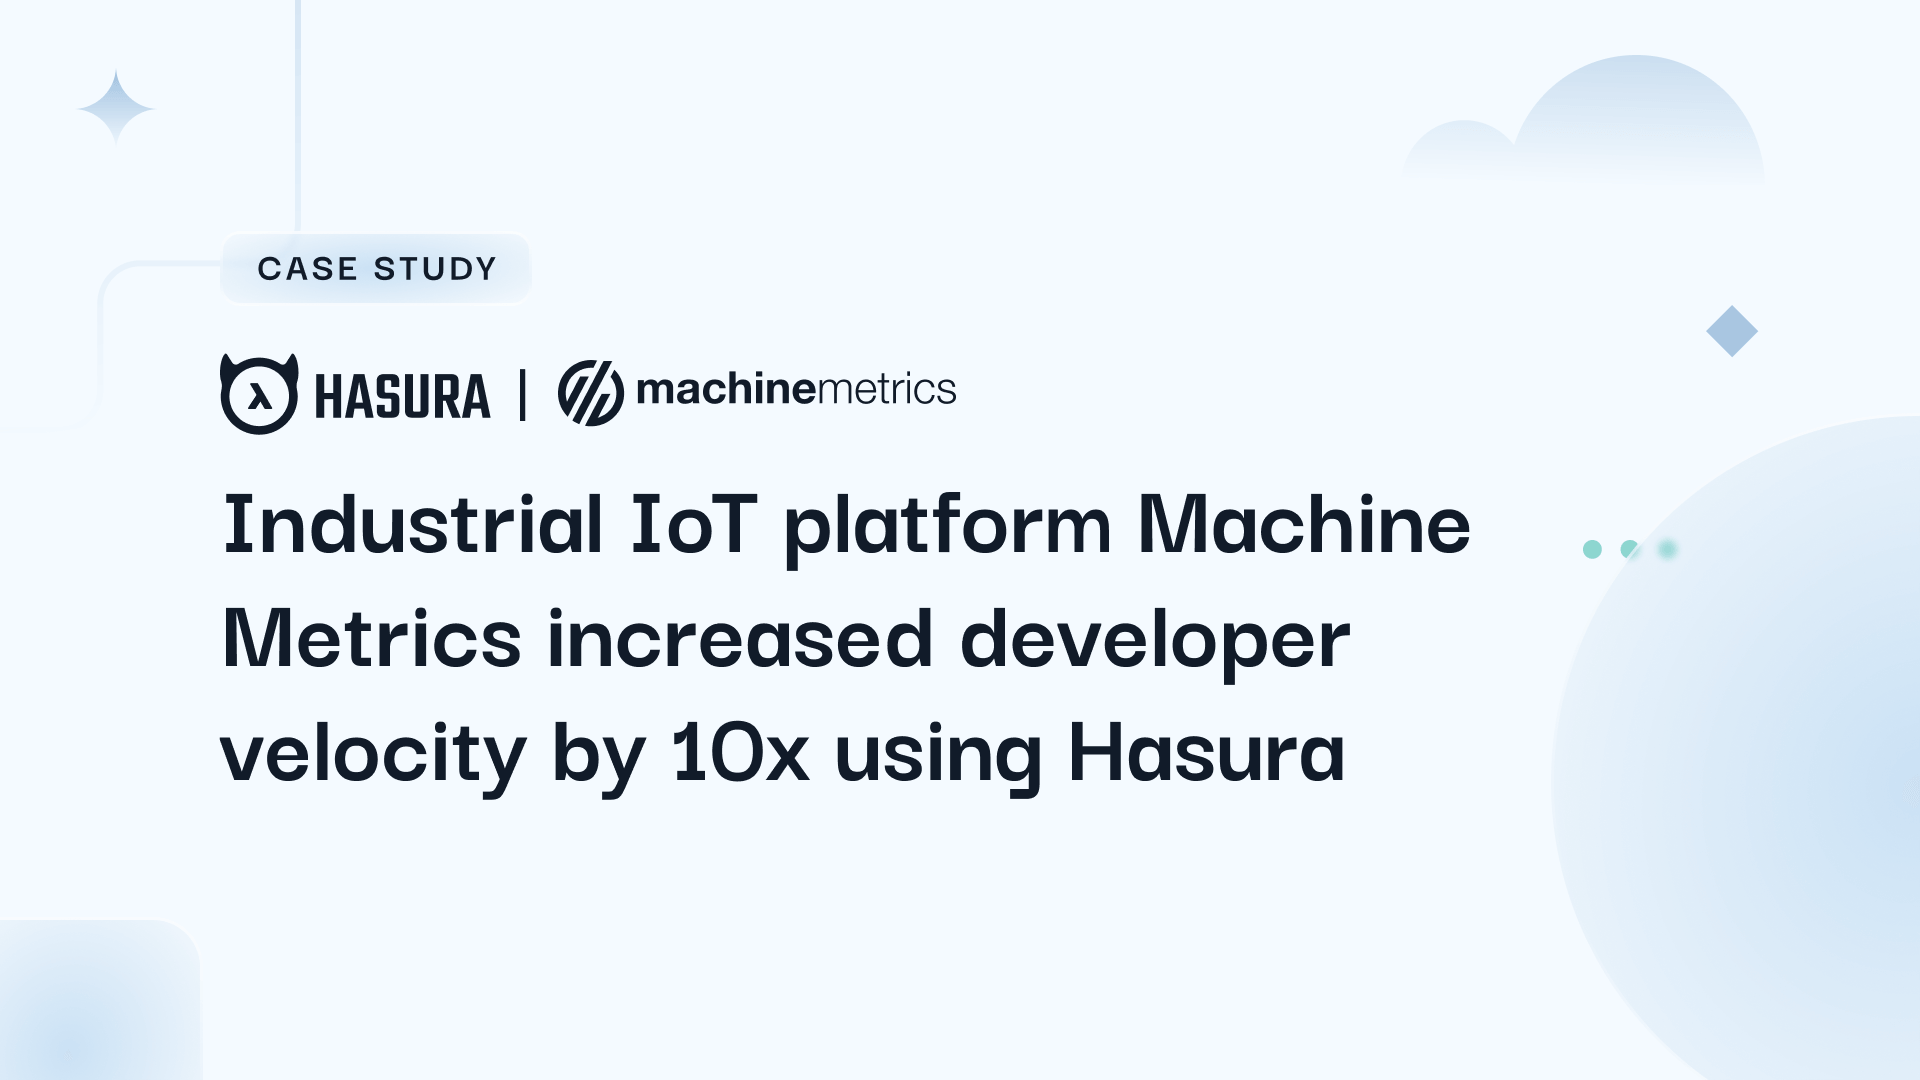 Case Study: Industrial IoT Platform Machine Metrics Increased Developer Velocity by 10x Using Hasura